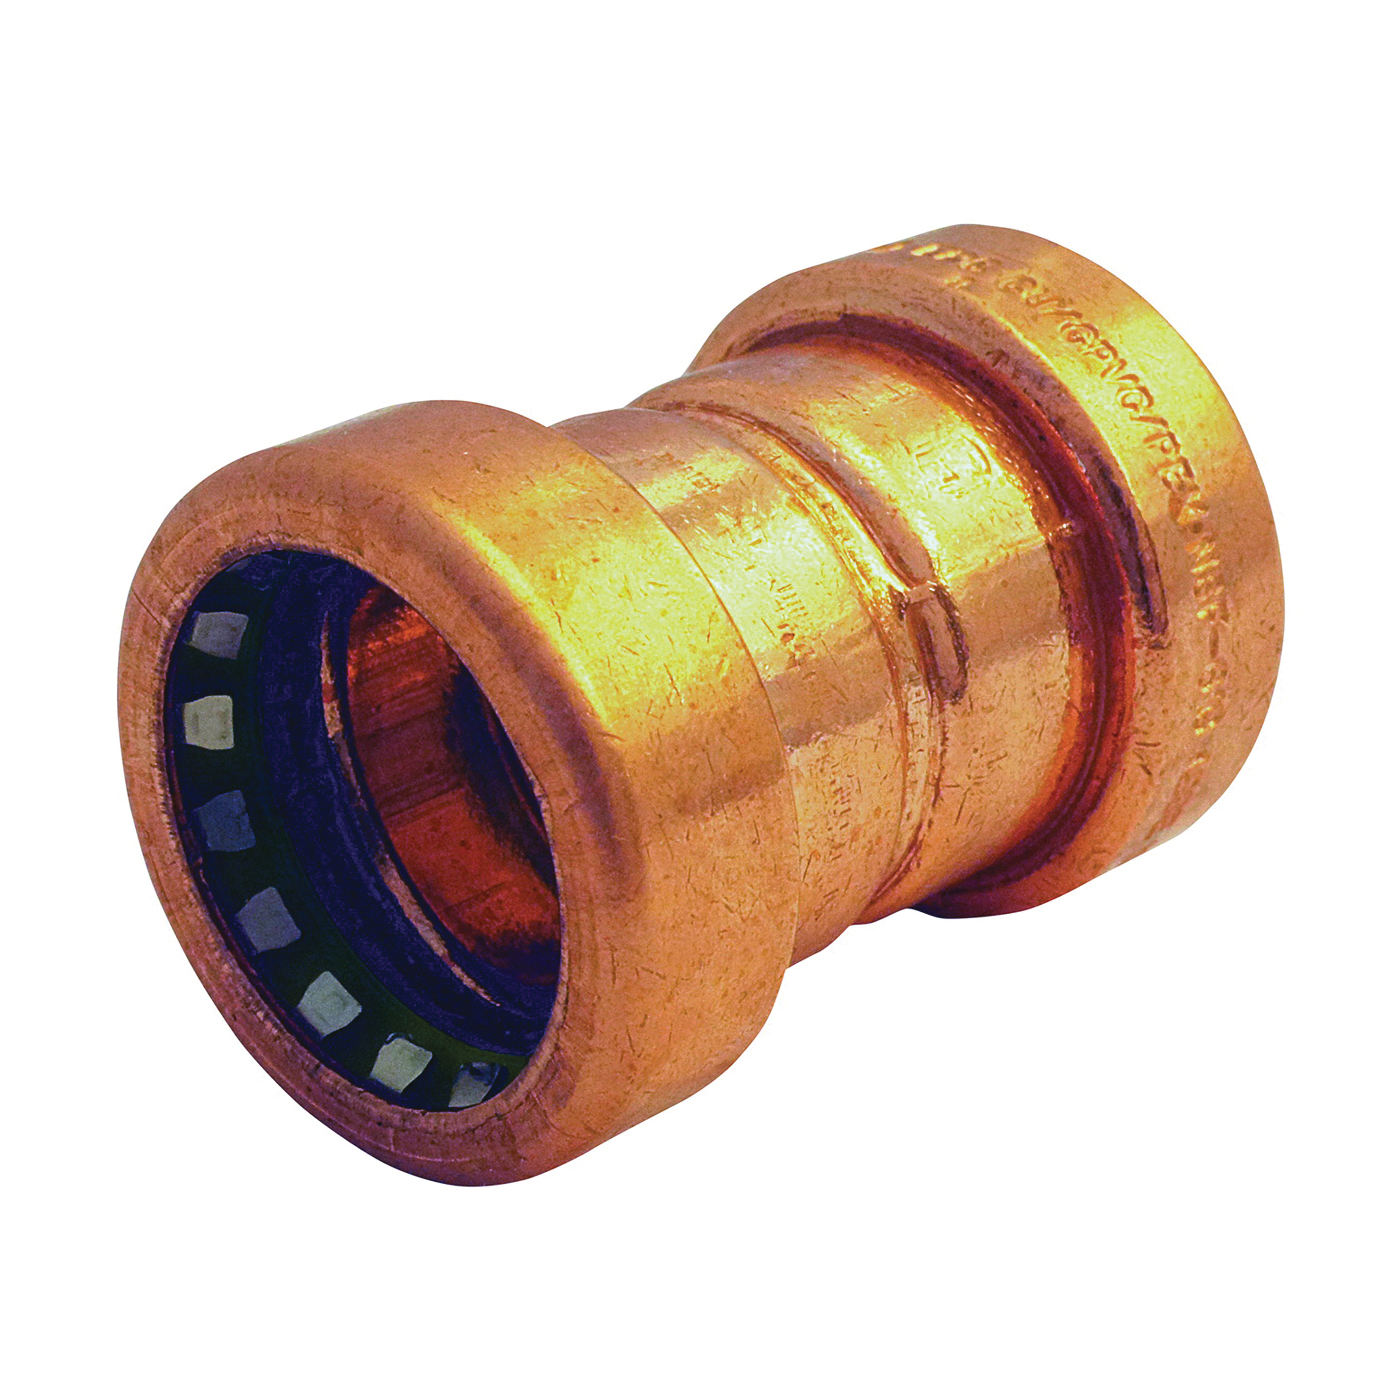 900 Series 10170700 Pipe Coupling, 1/2 in, Copper, 200 psi Pressure